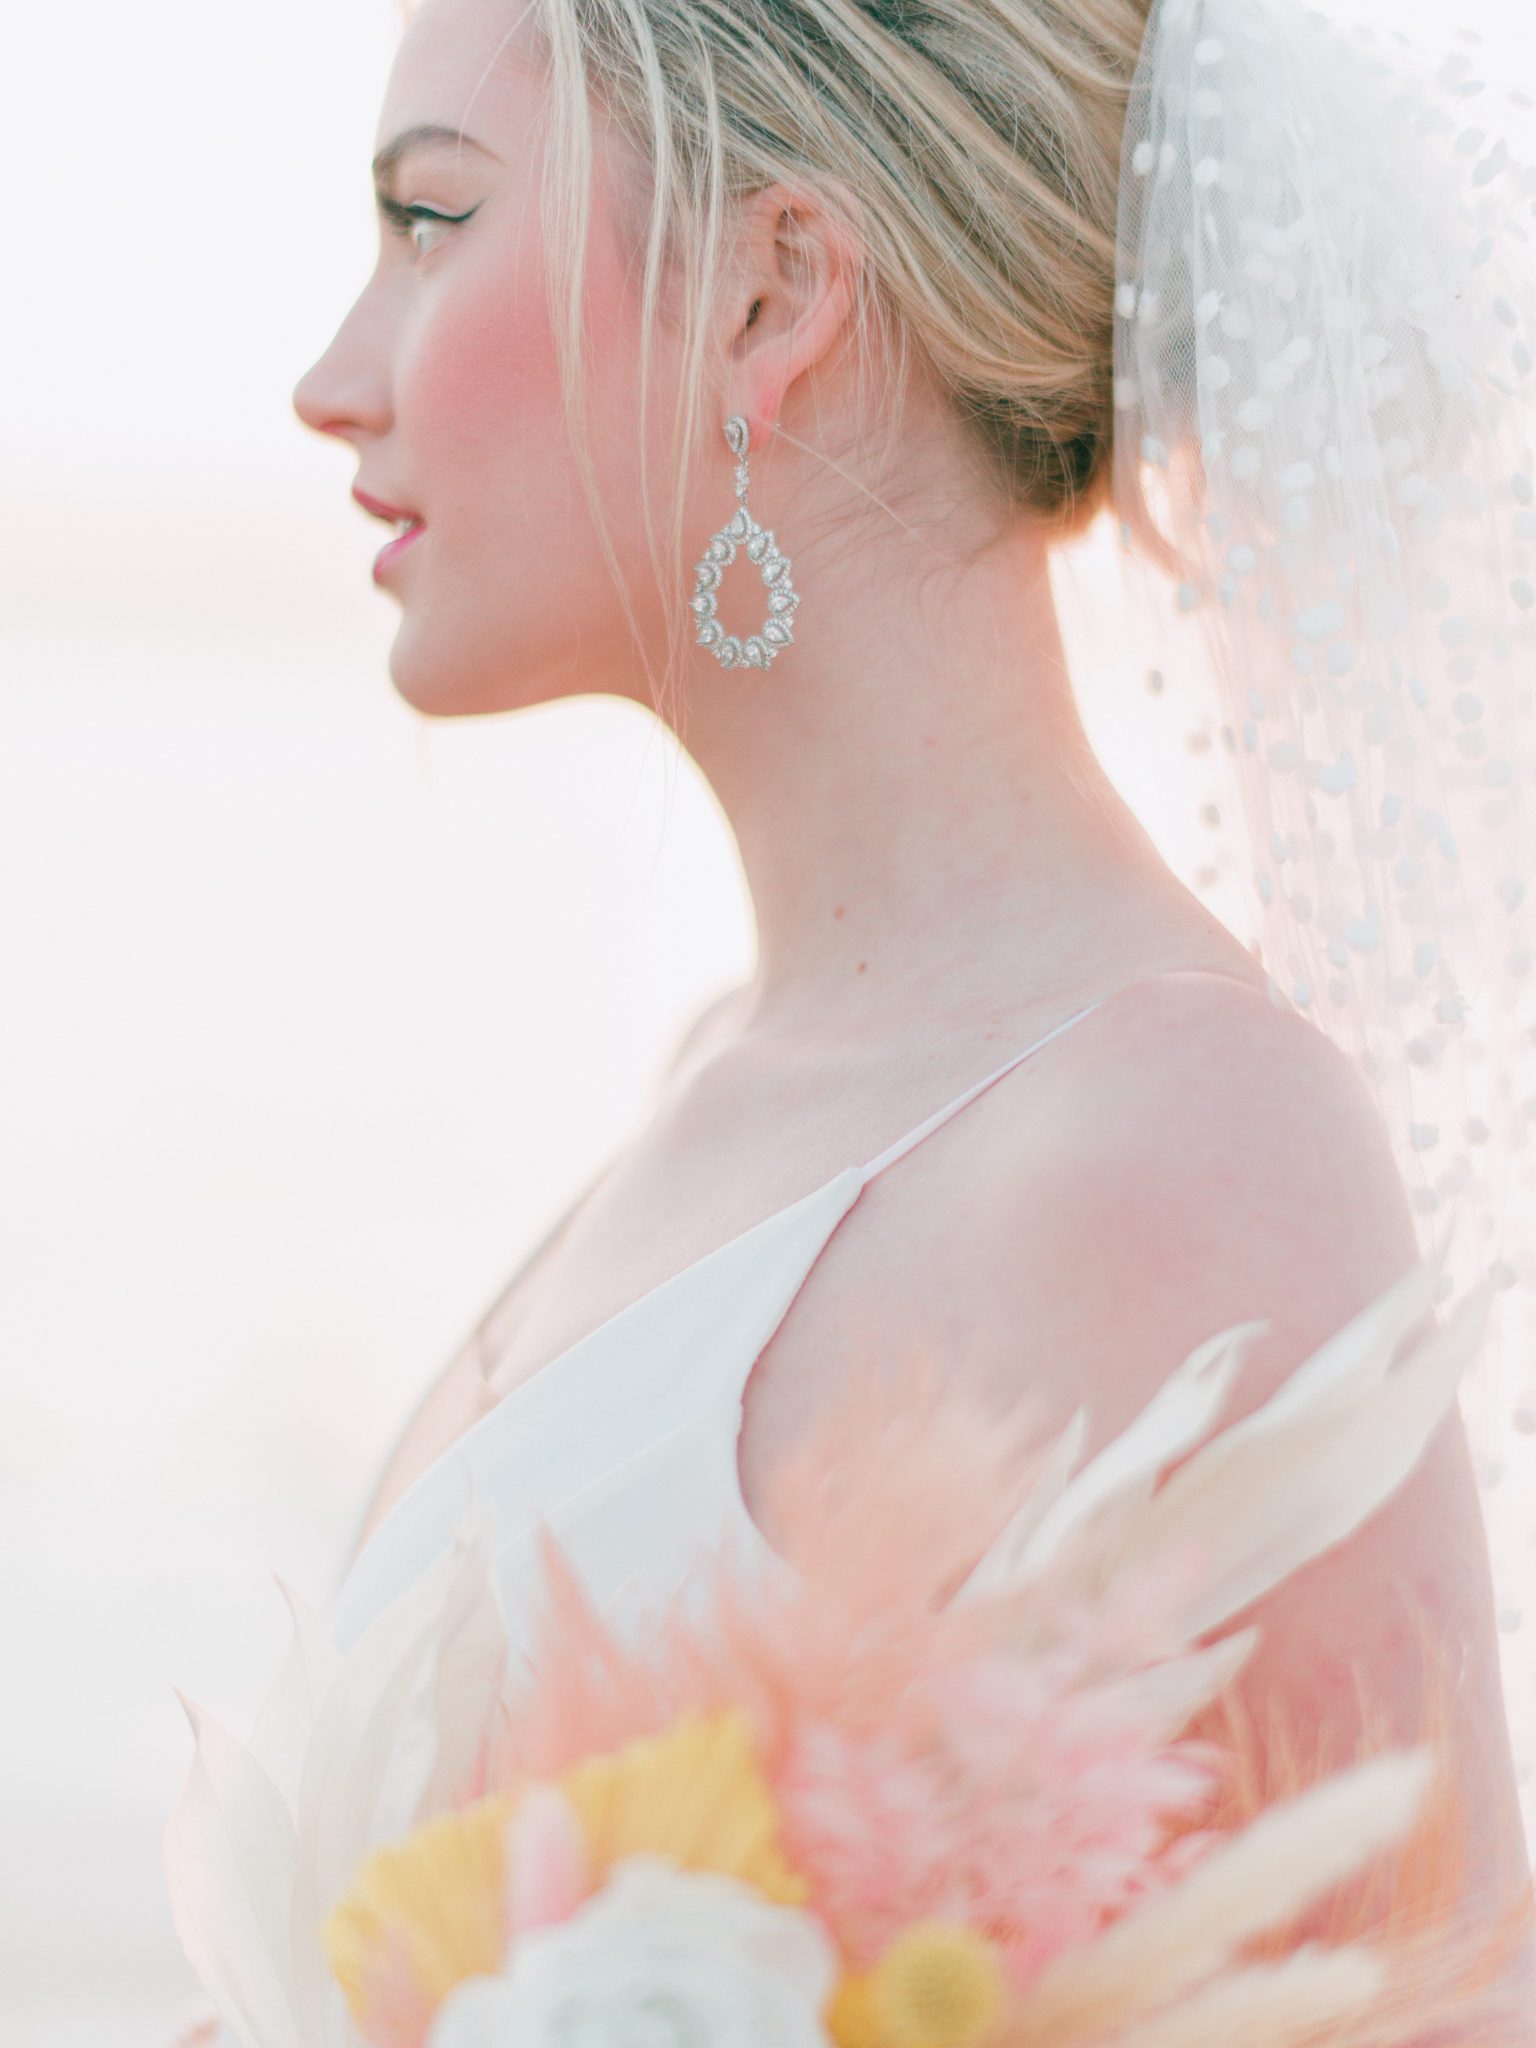 Retro bridal styles with polka dot veil from Canadian veil designer, modern bridal looks